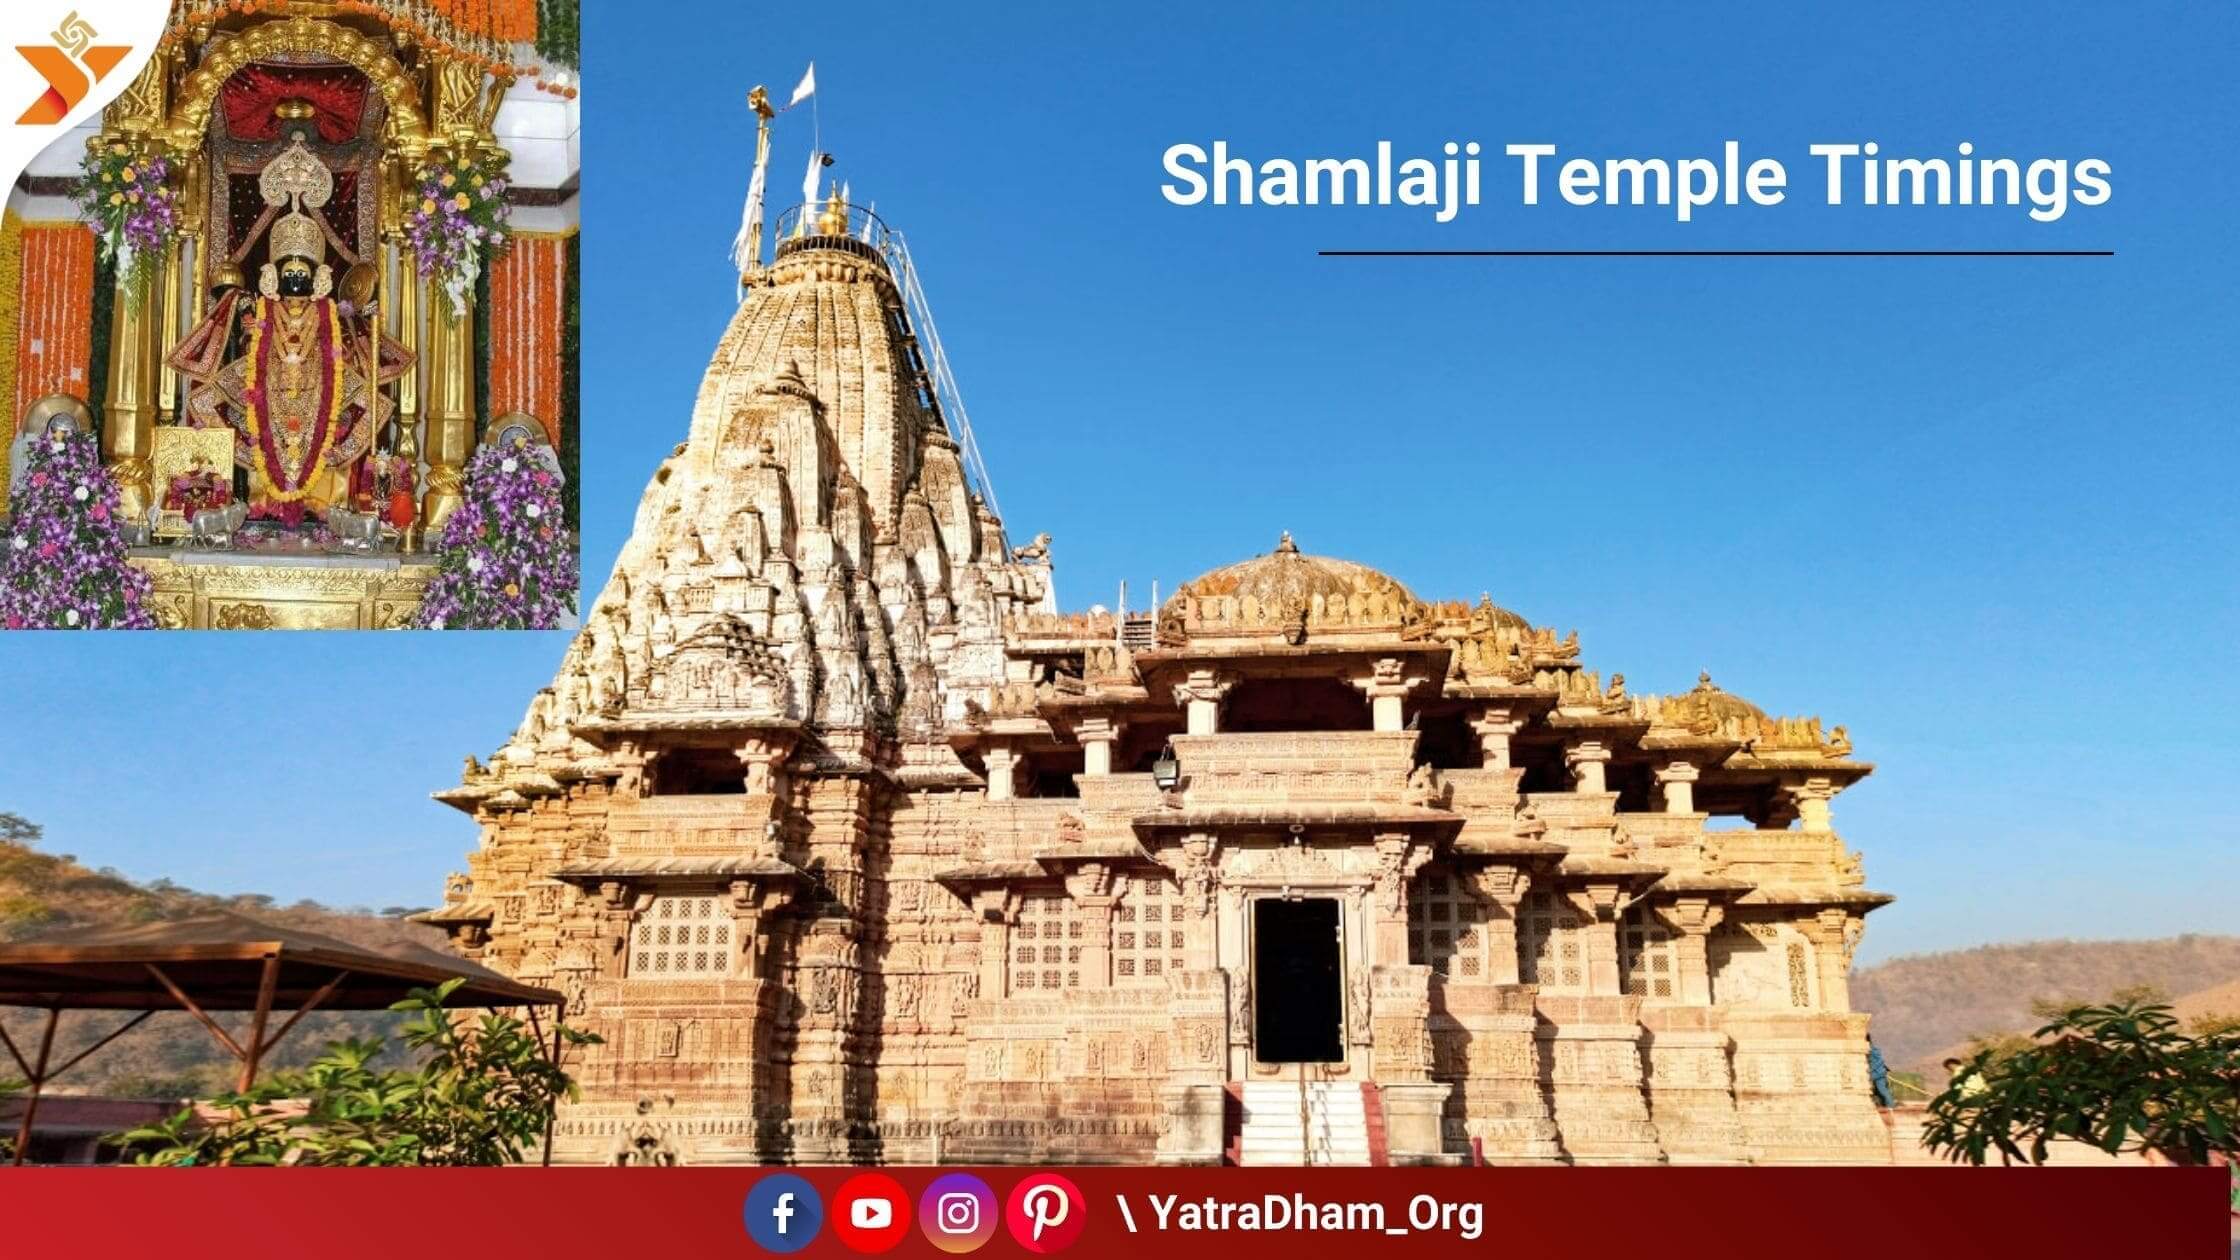 shamlaji temple darshan time